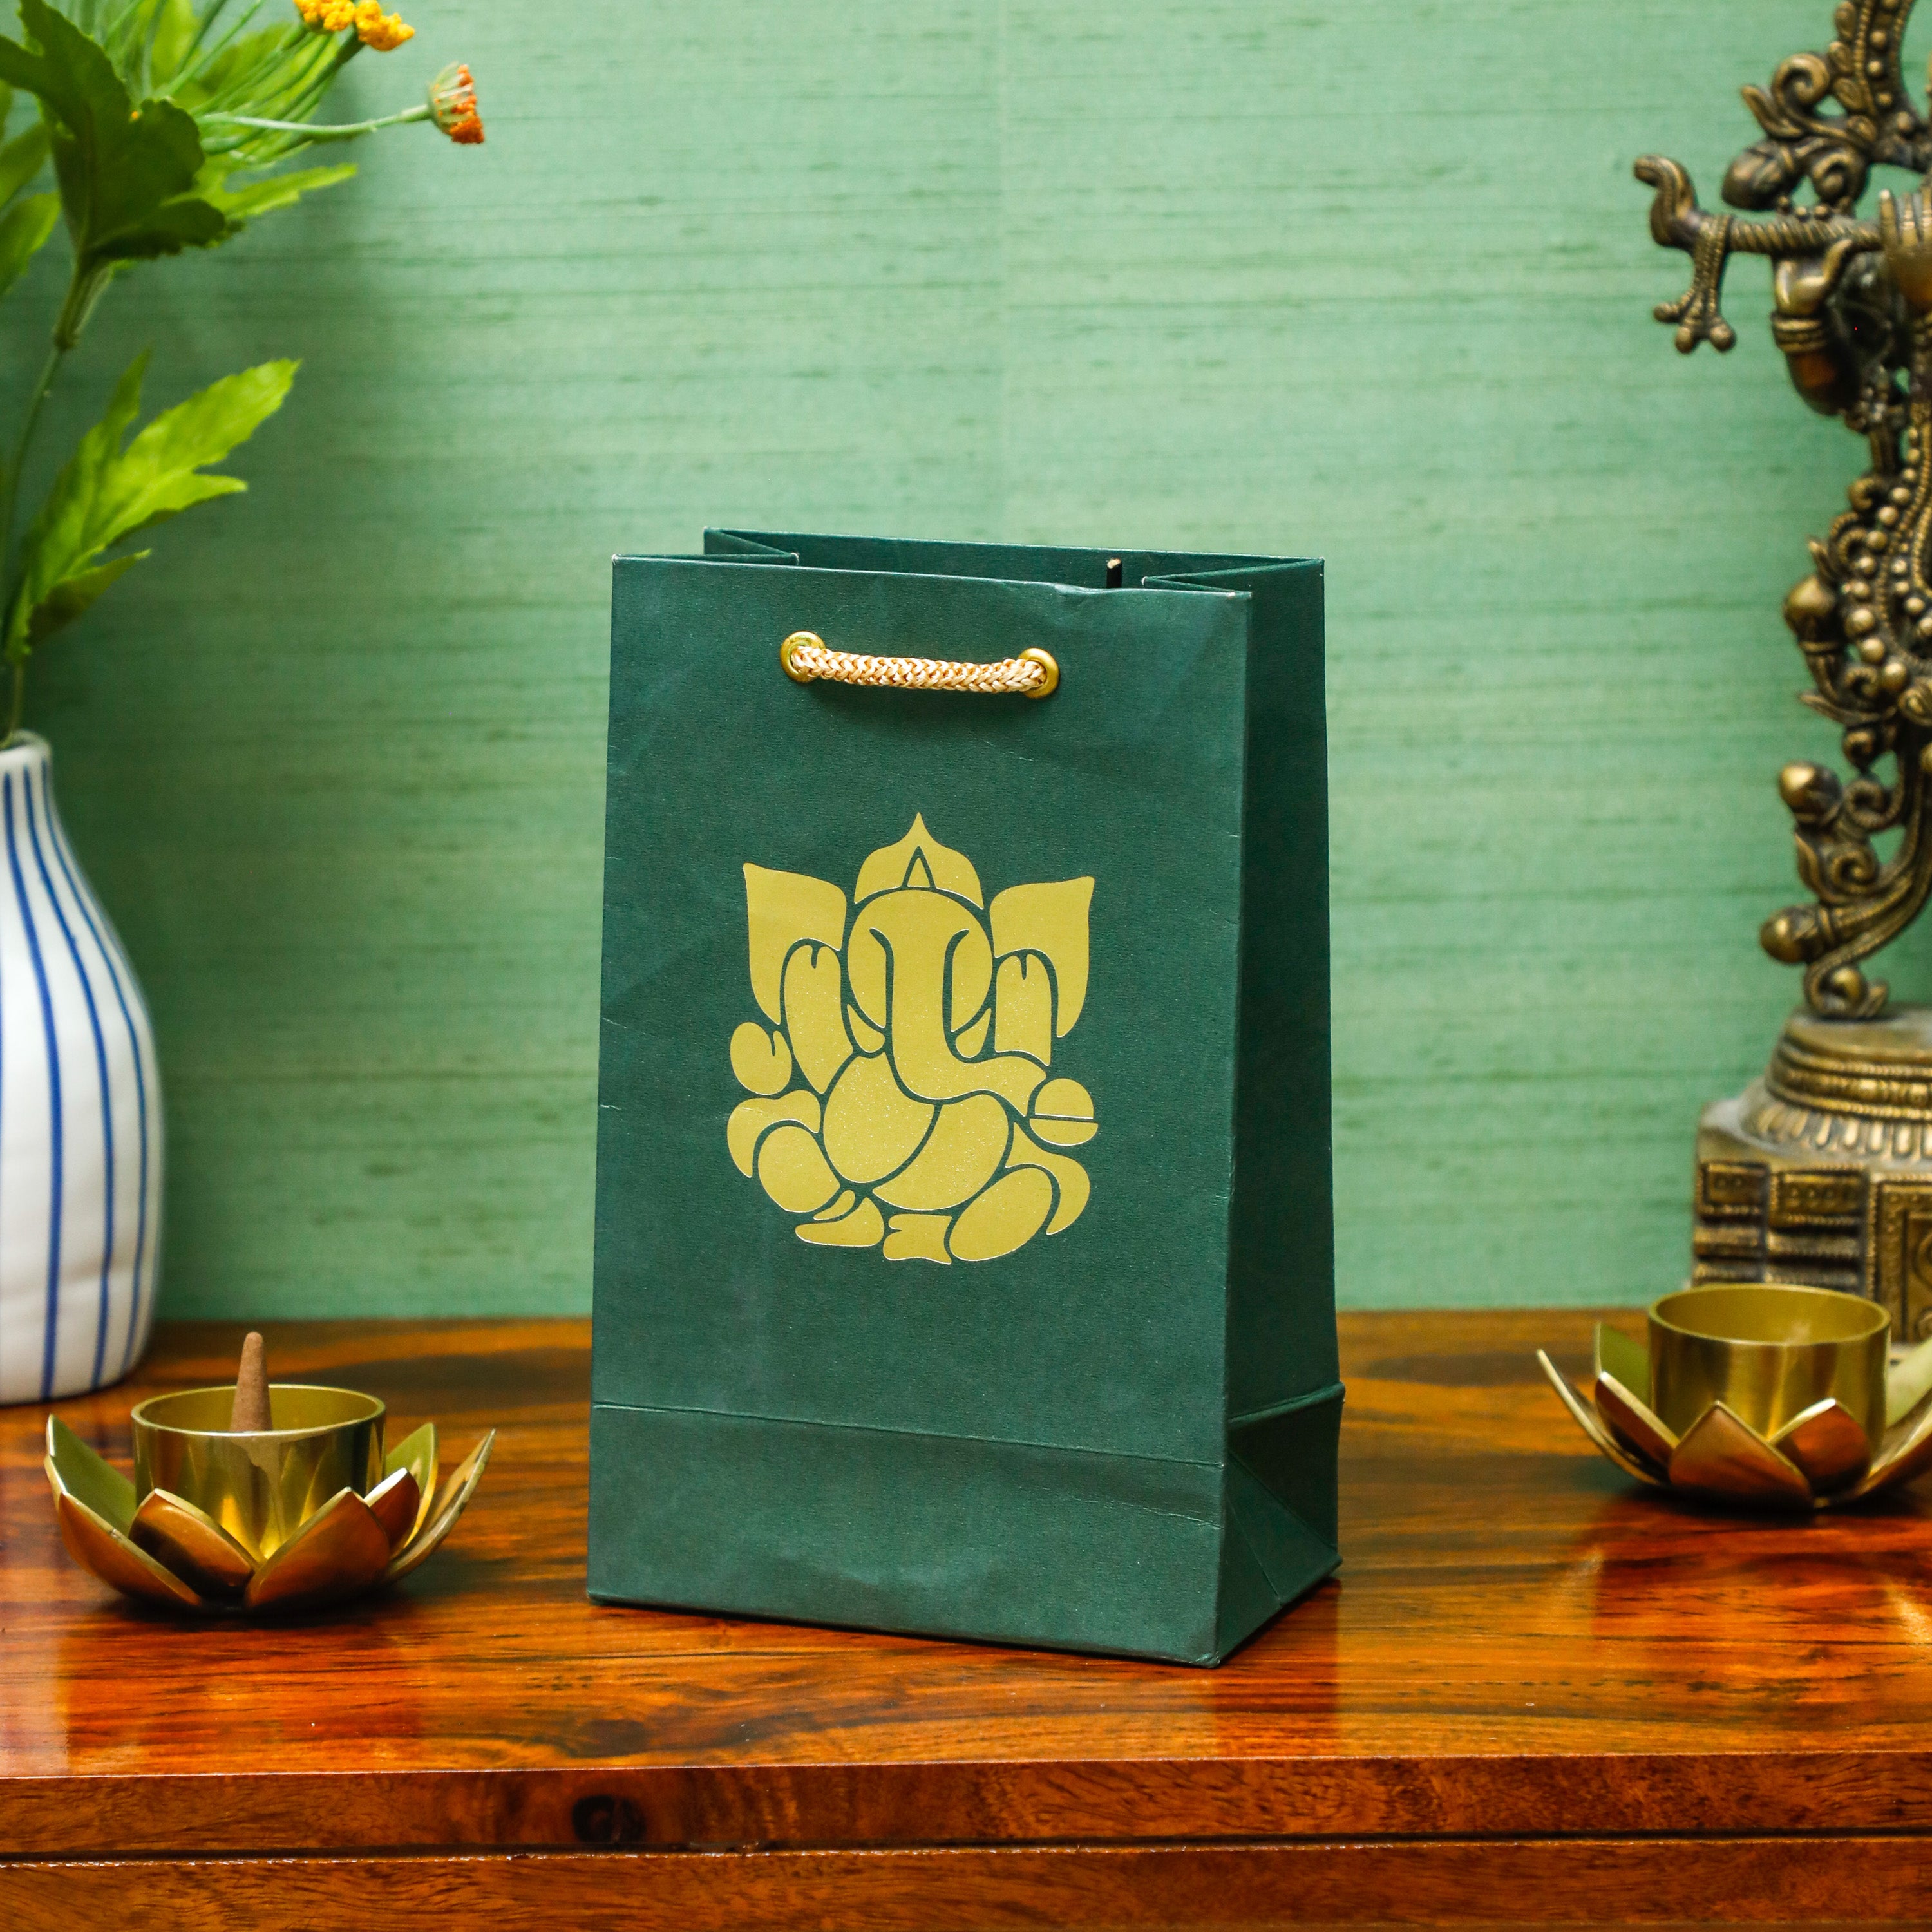 Ashu Handlooms Handmade Khadi Shopping Bag For Women | Office : Amazon.in:  Shoes & Handbags